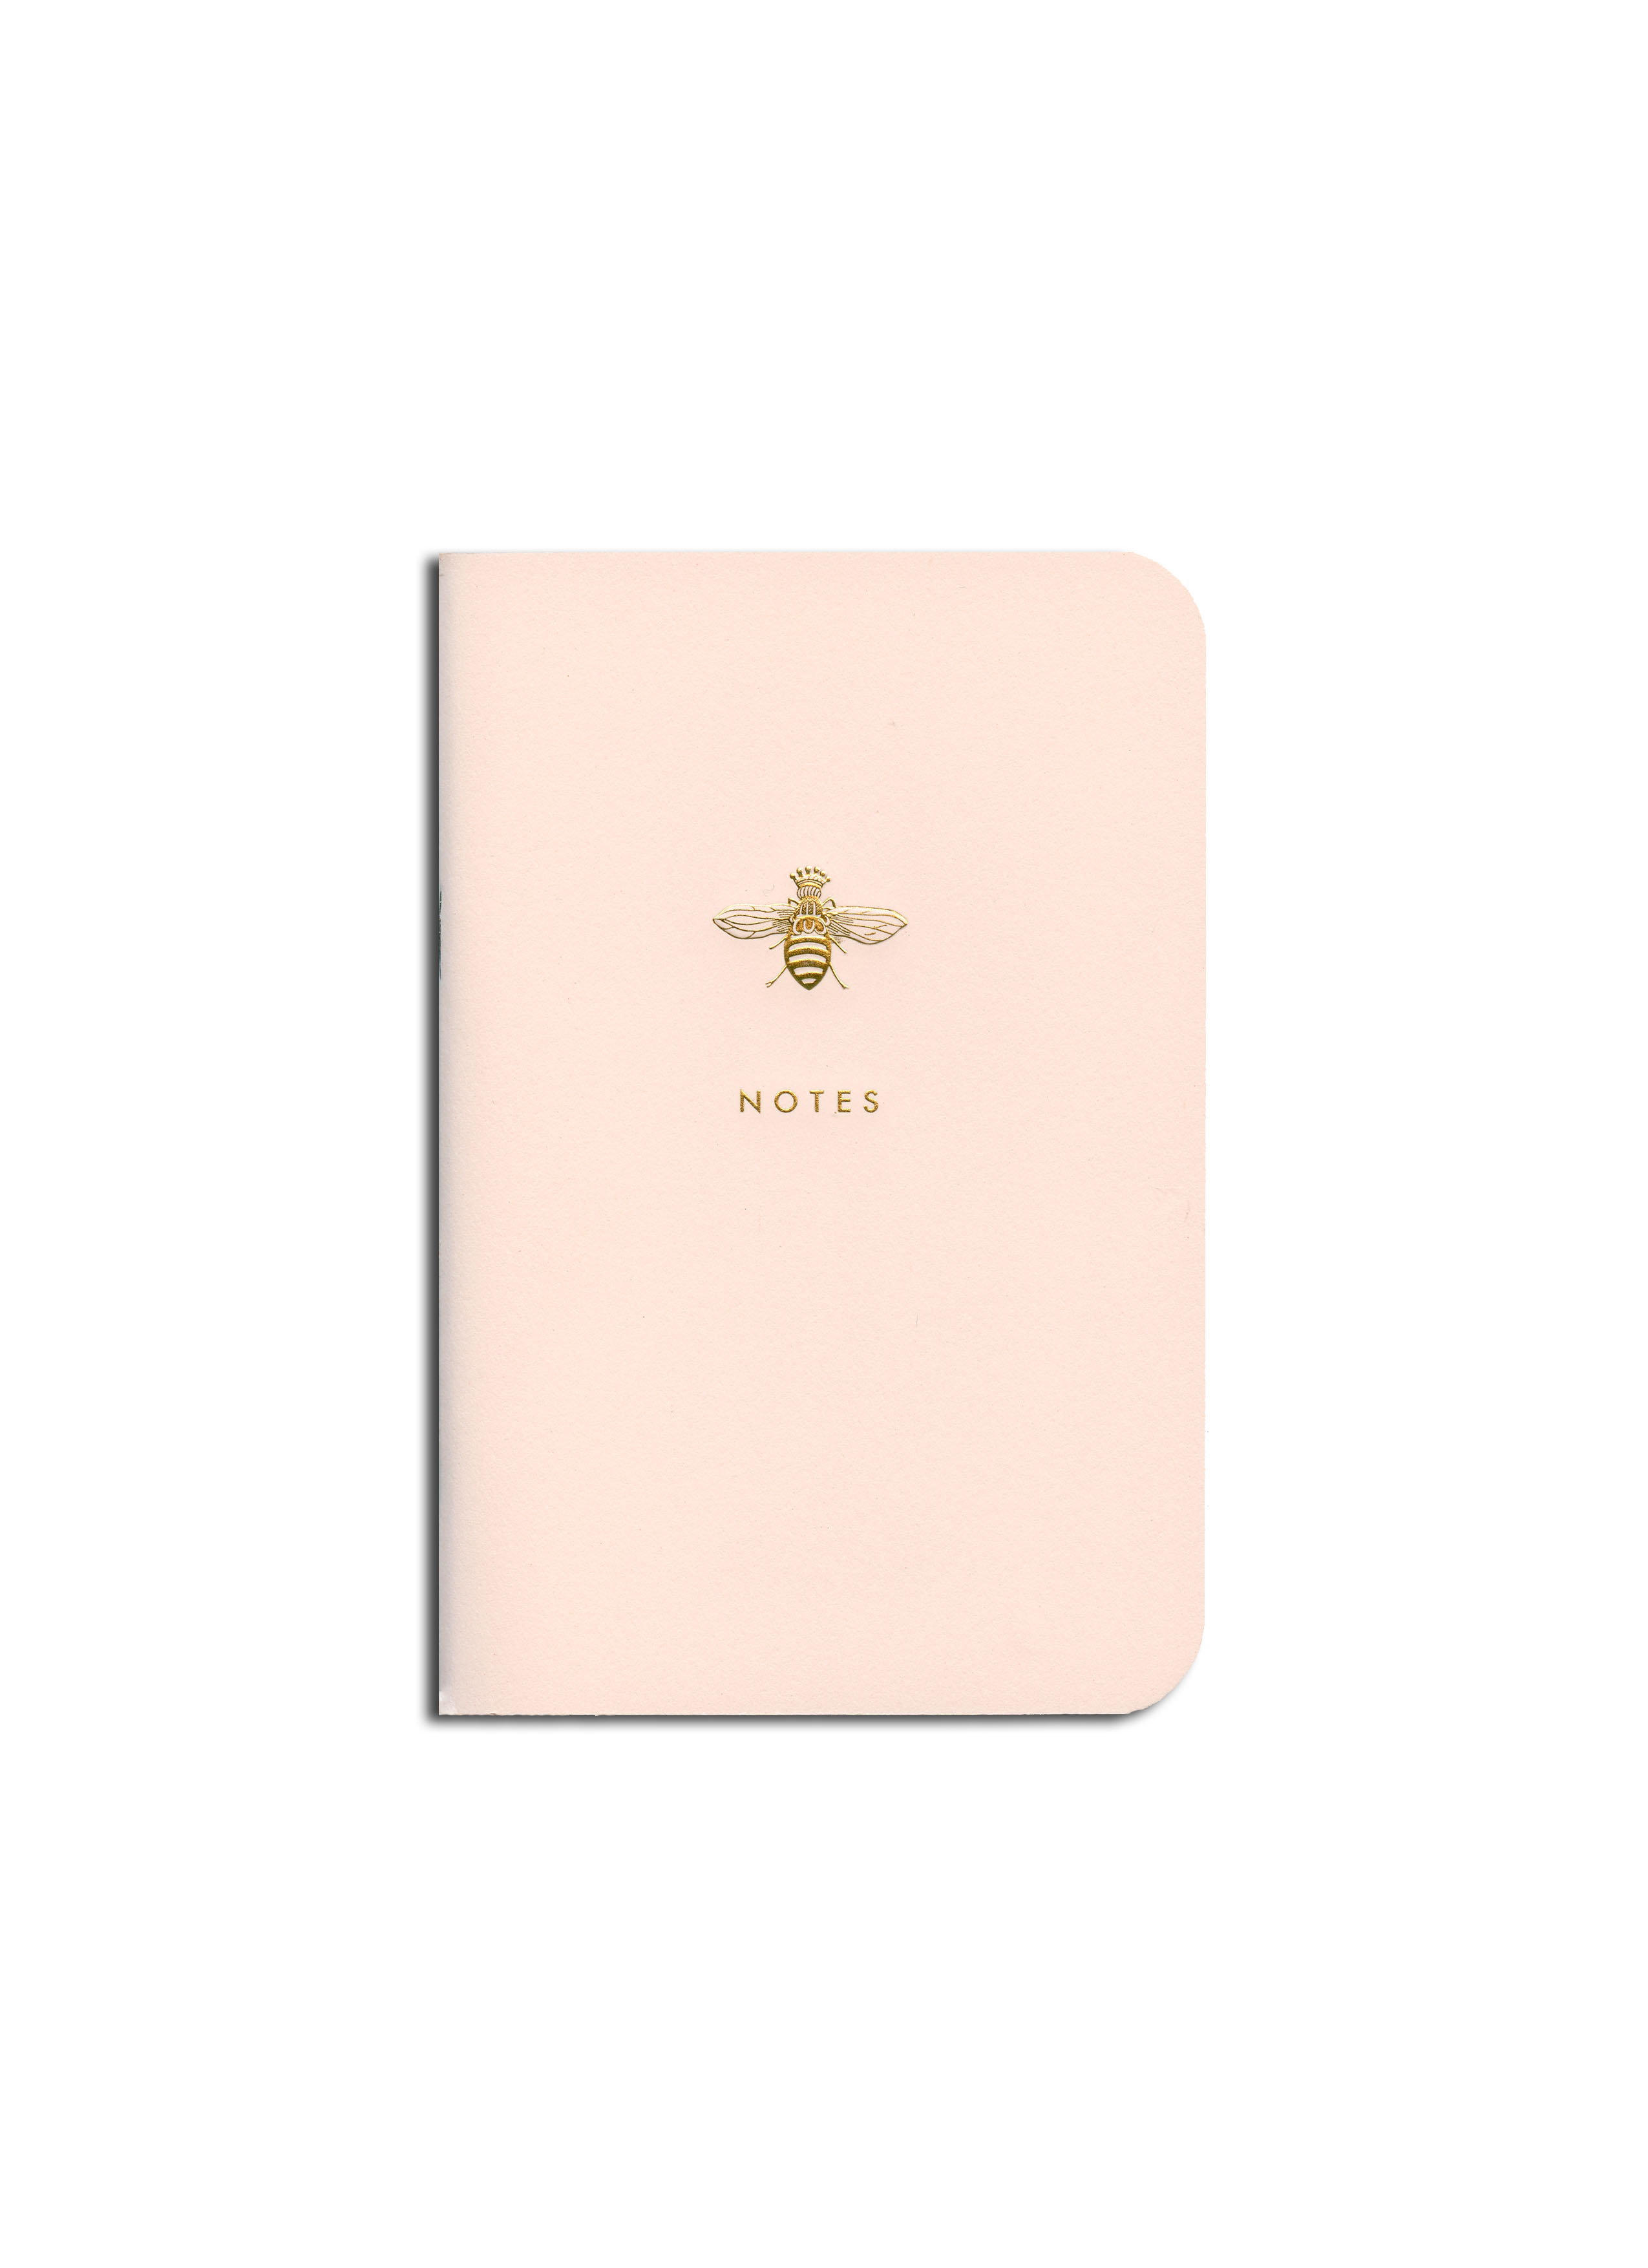 Crane Notebook Collection: Journaling Just Got a Second Wind